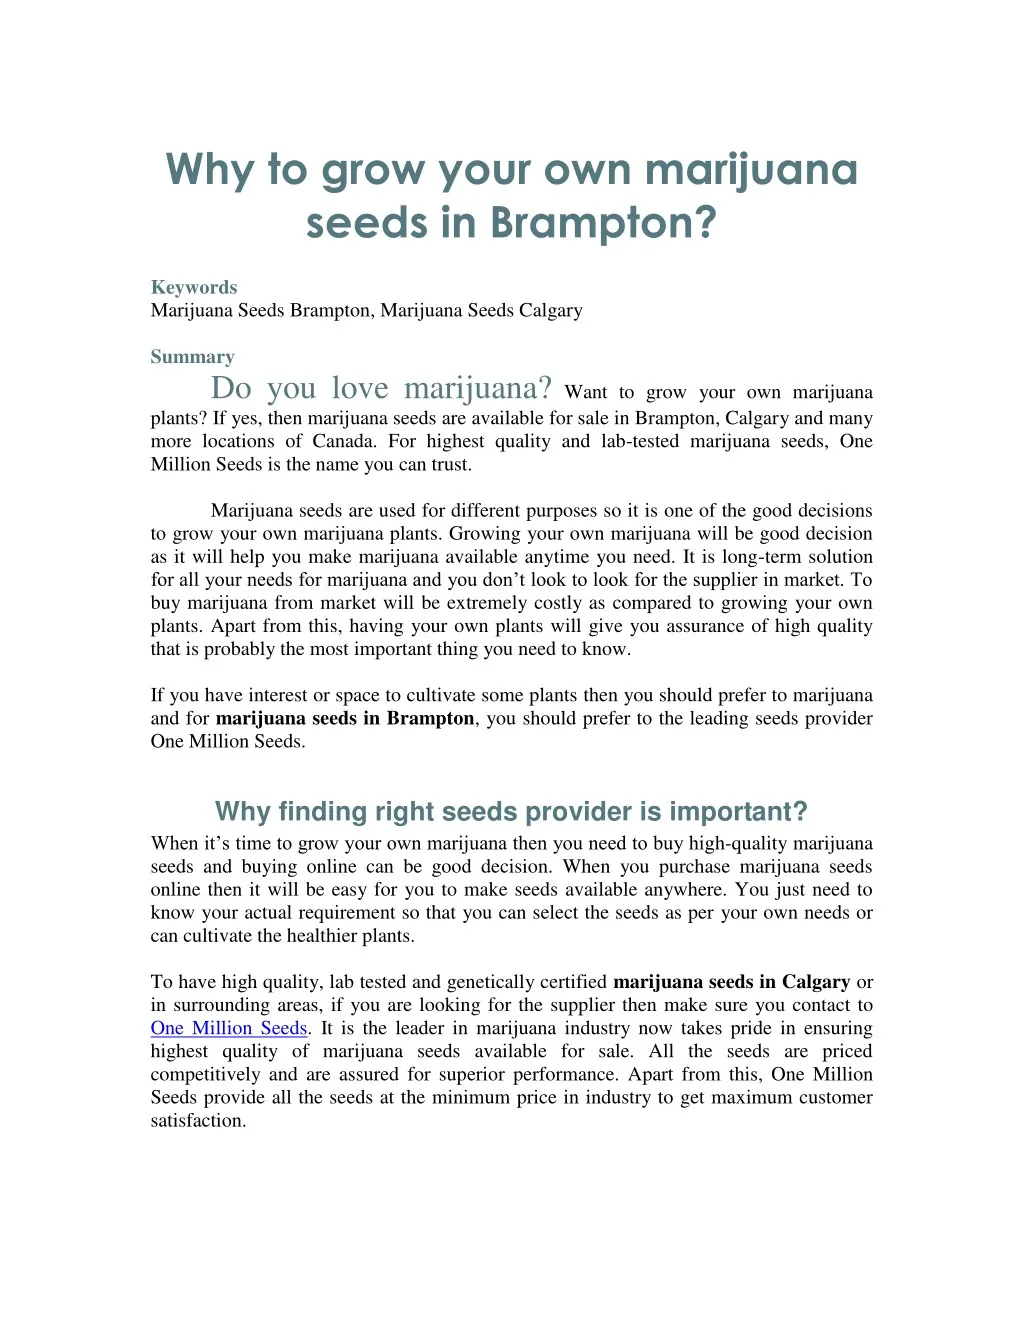 why to grow your own marijuana seeds in brampton